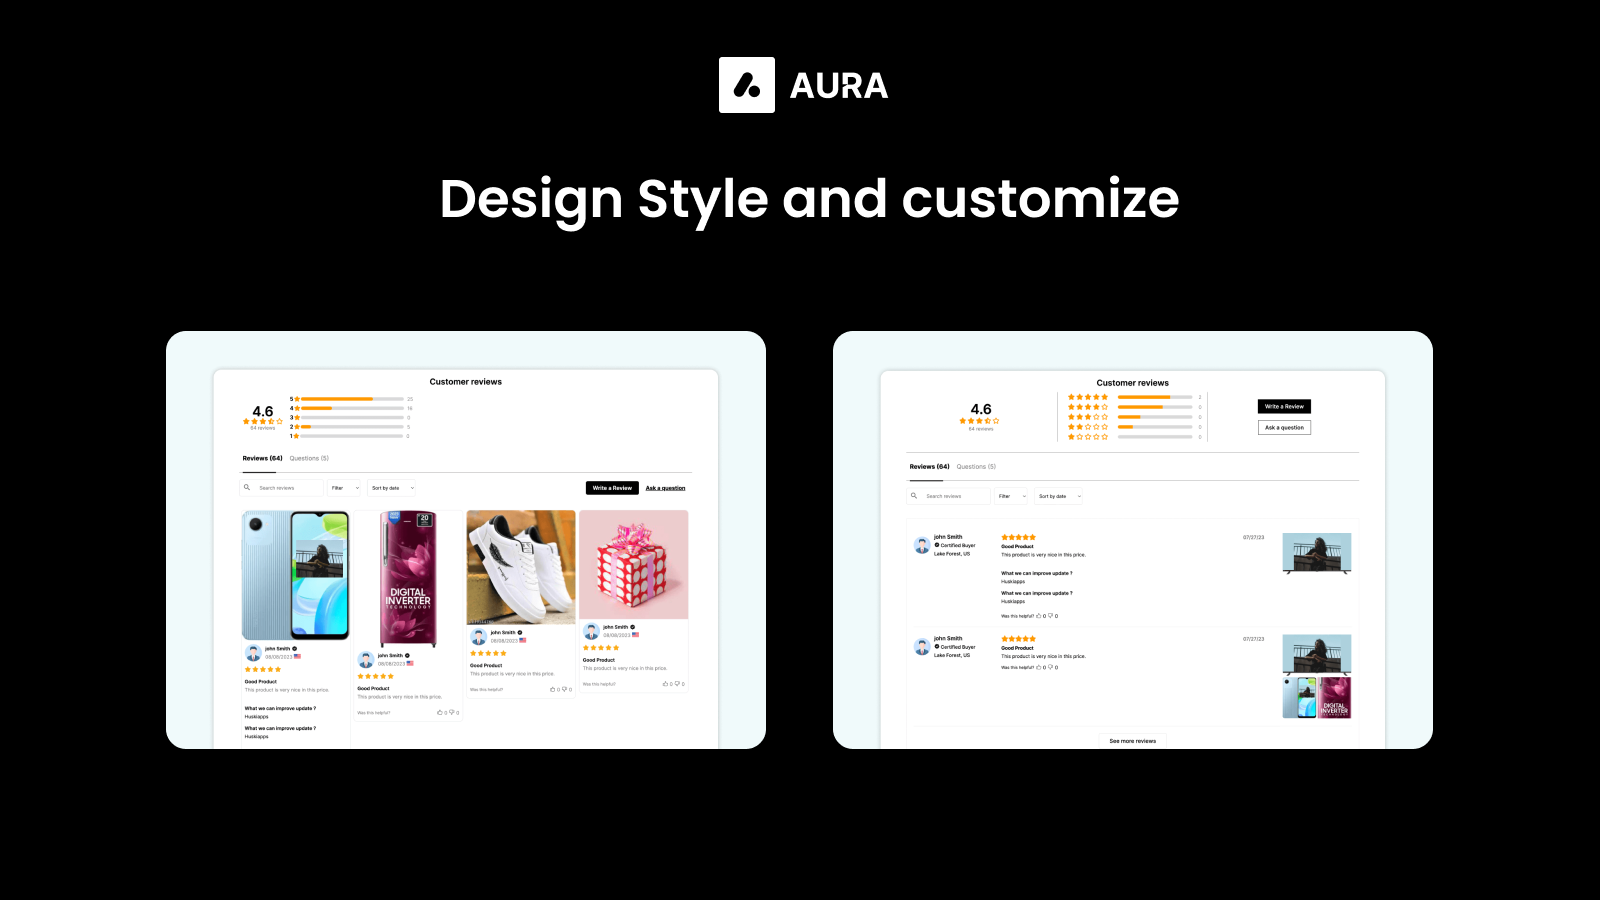 Design Customize - Aura